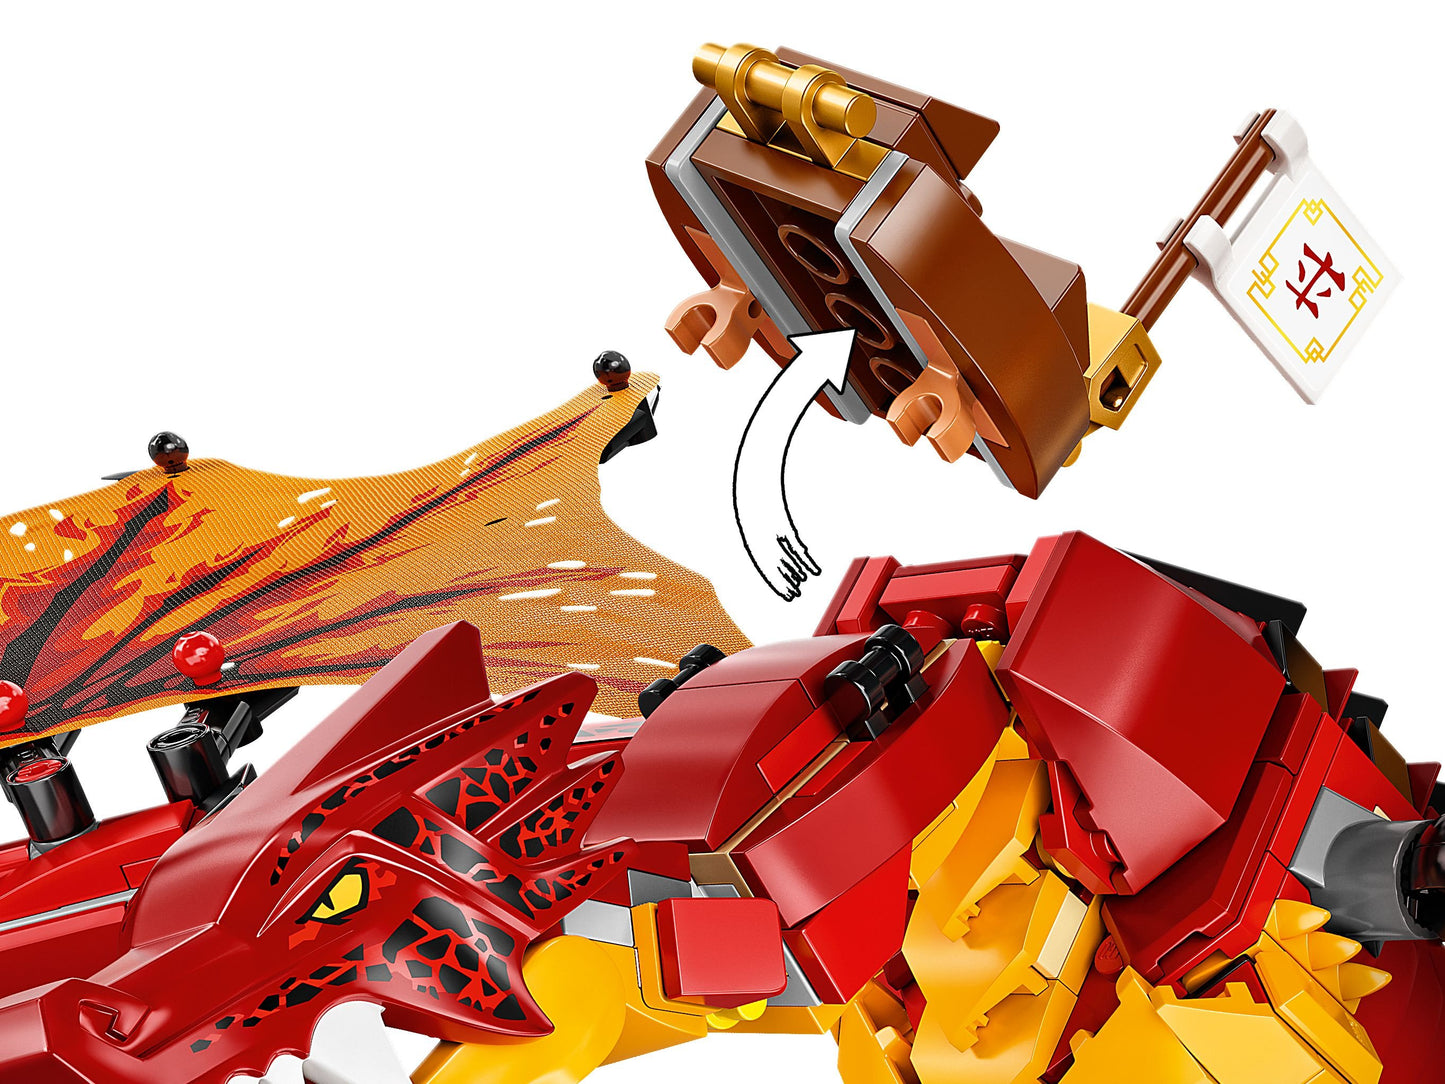 LEGO® 71753 - Ninjago: Kais Feuerdrache